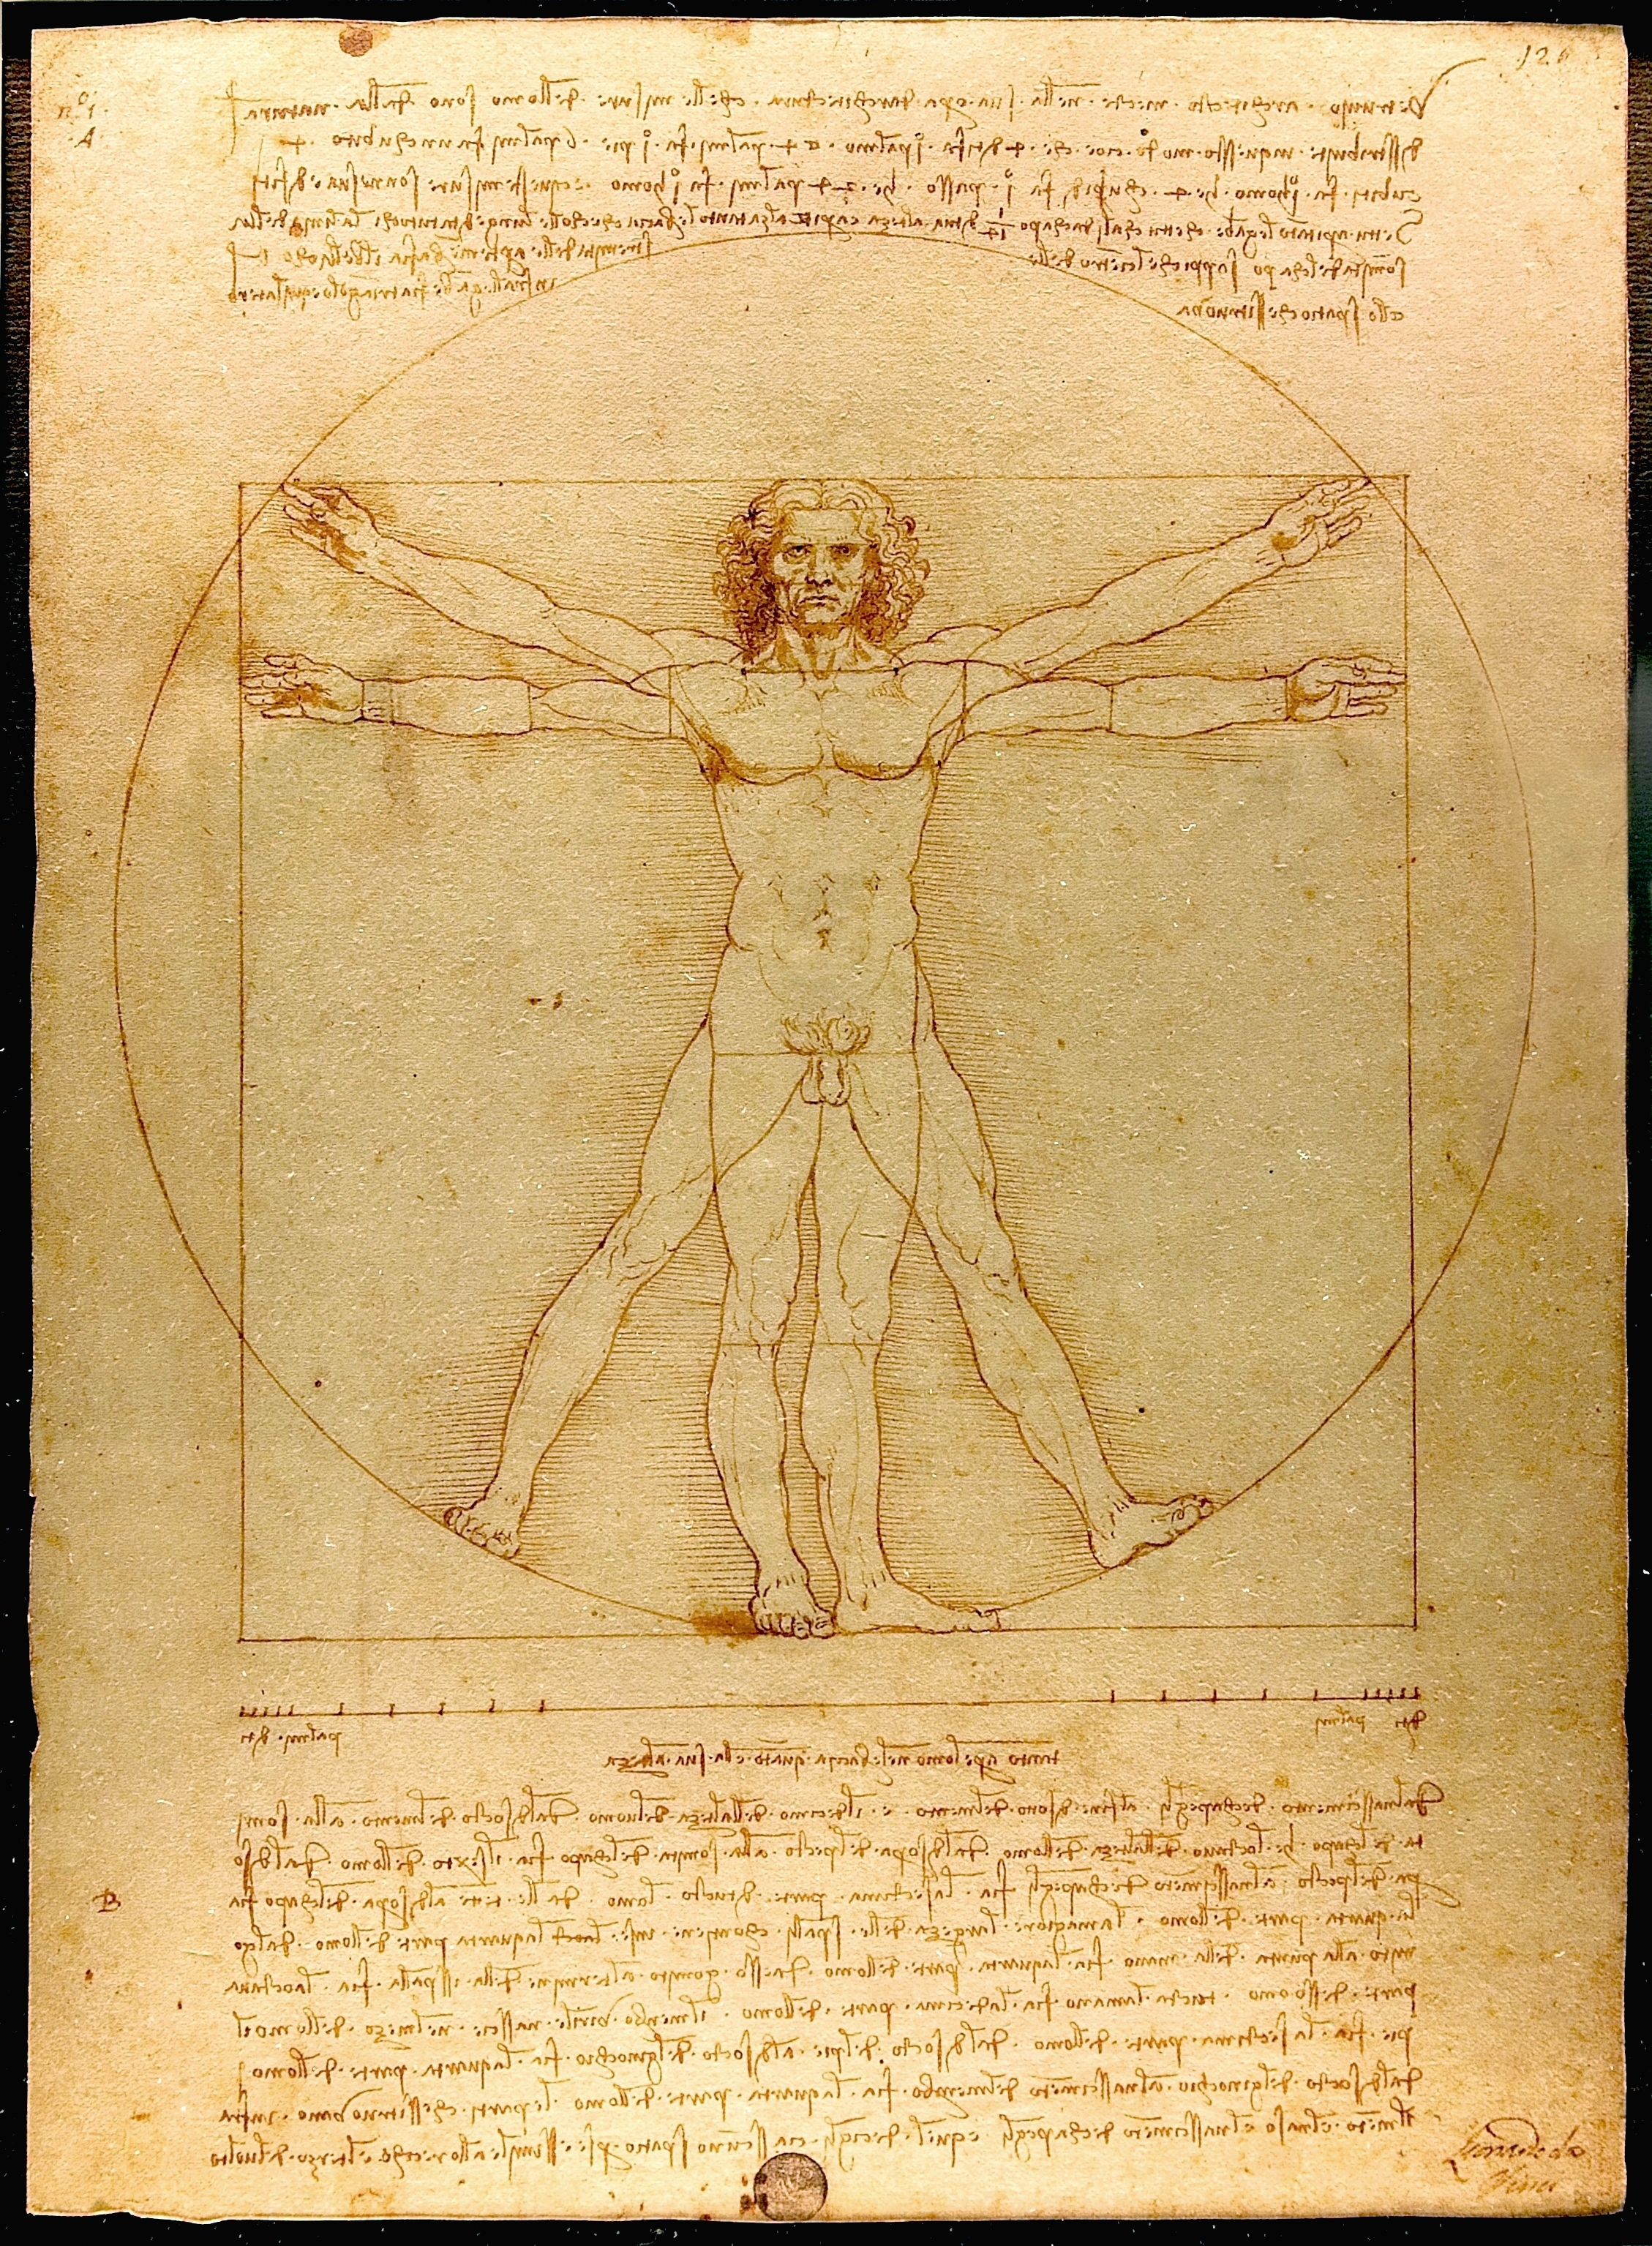 Leonardo Da Vinci's artistic study of the human body.